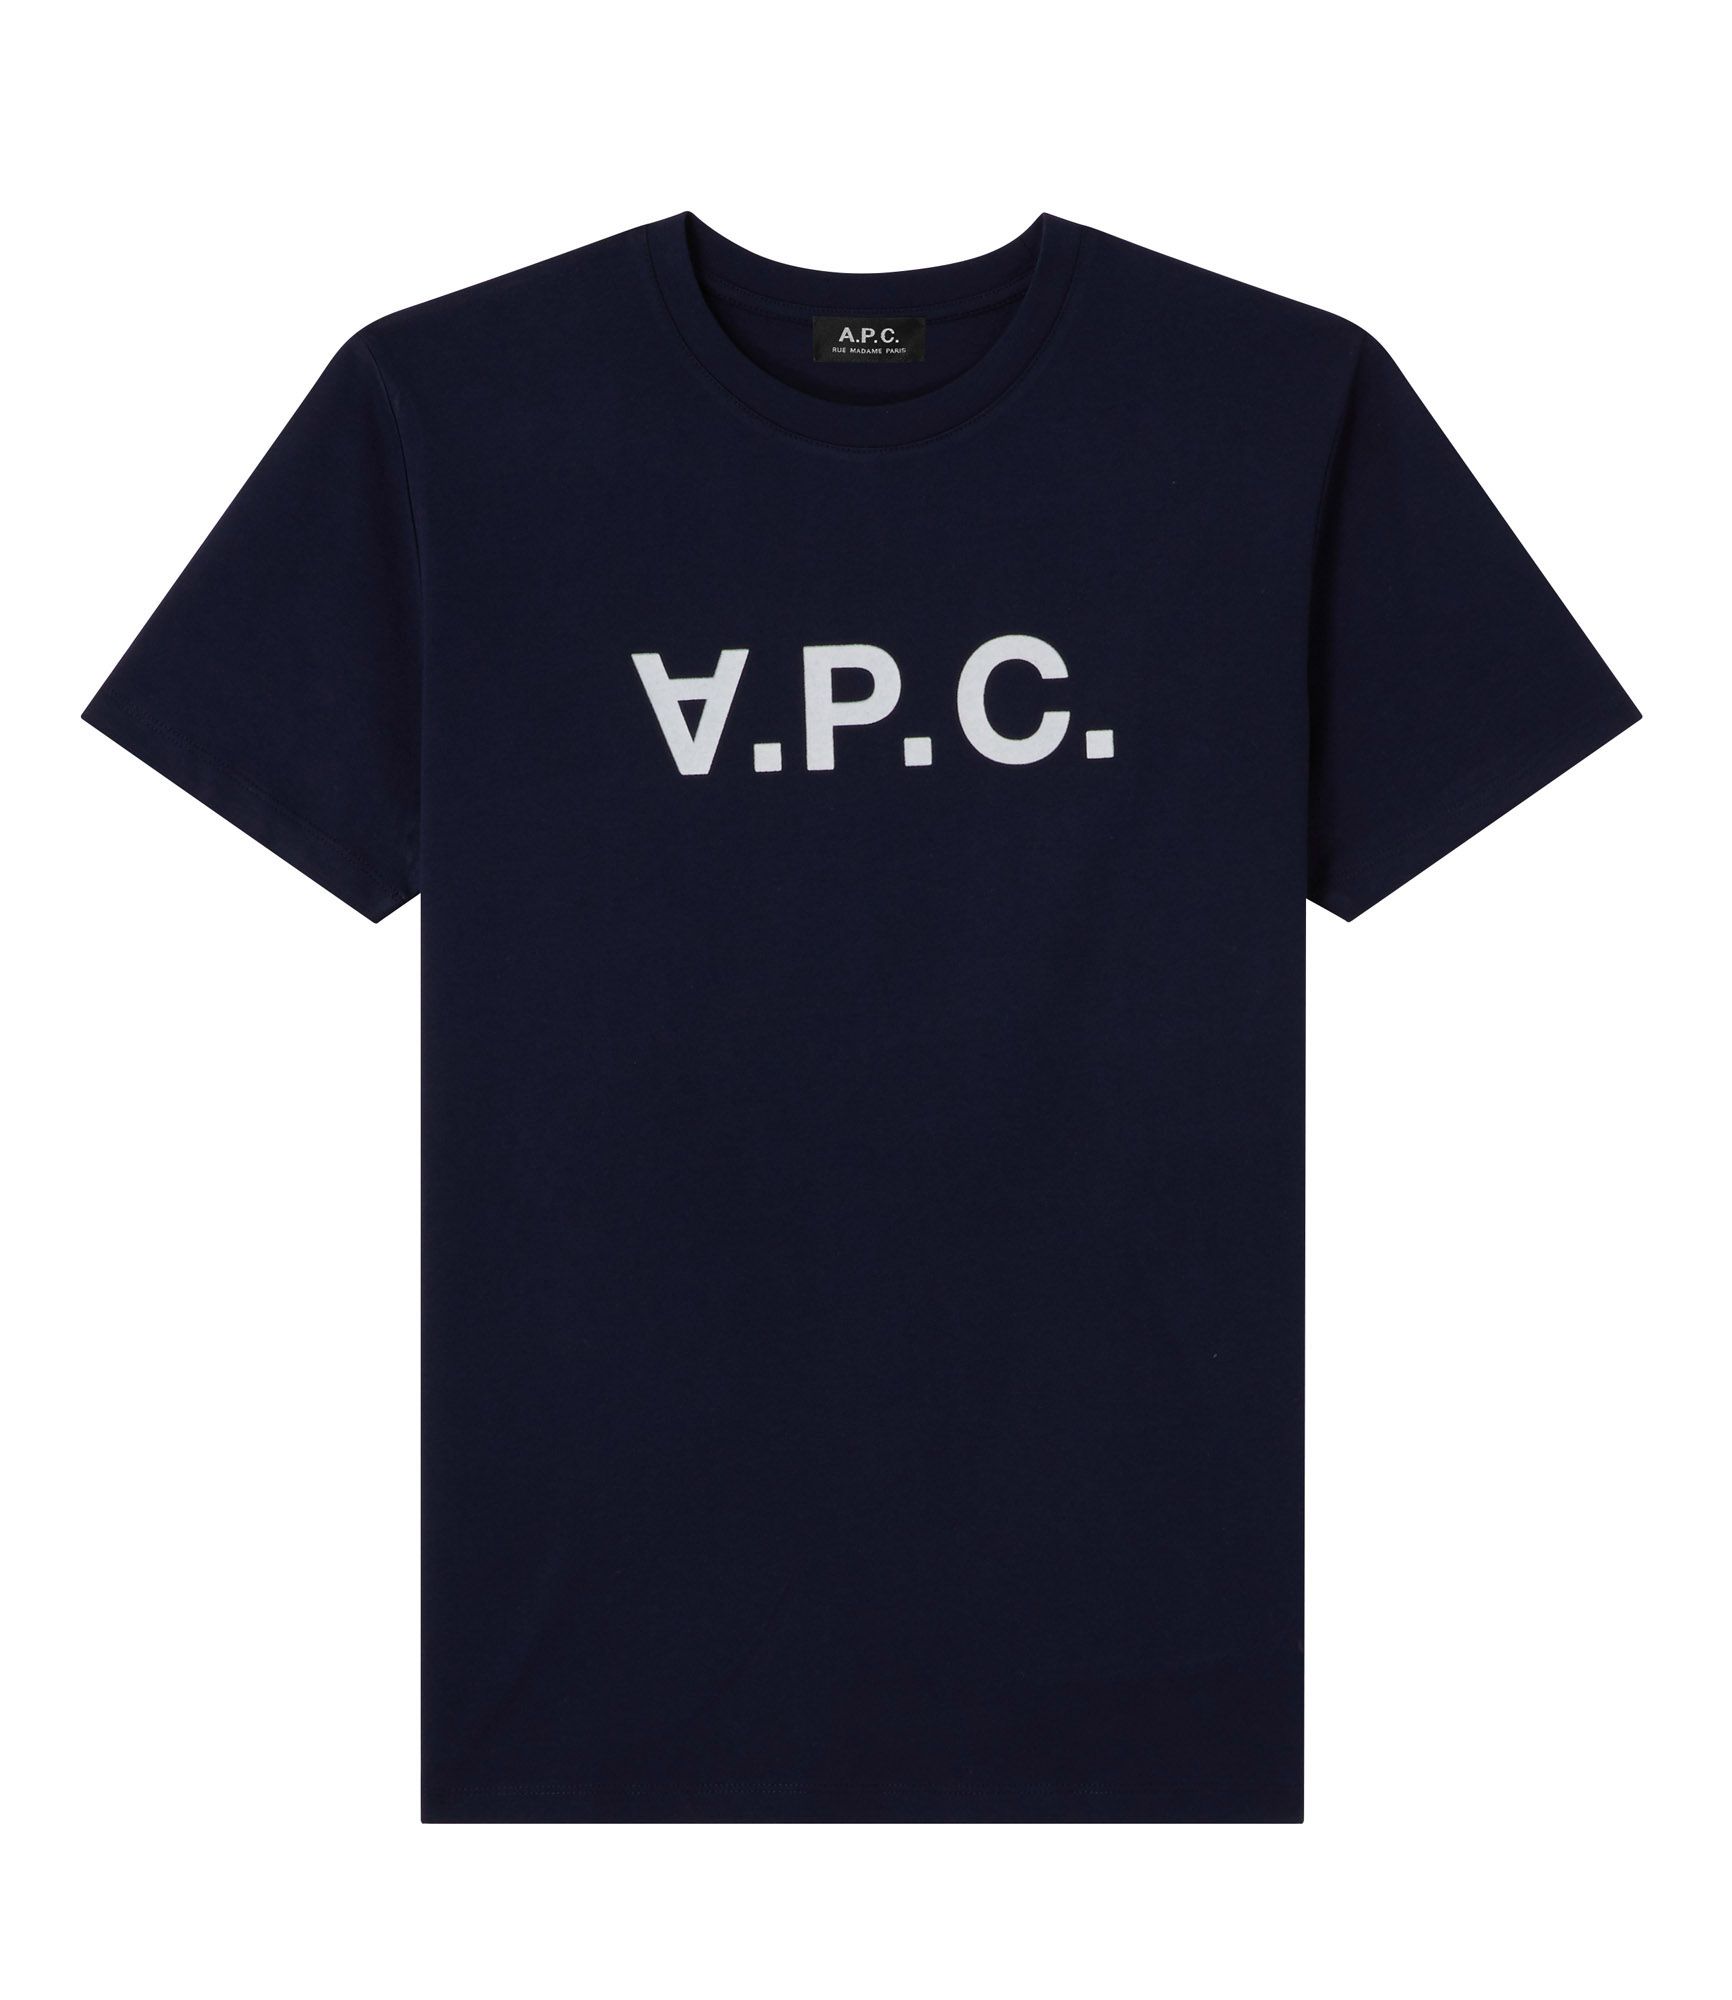 A.P.C. Dark Navy Blue VPC T Shirt